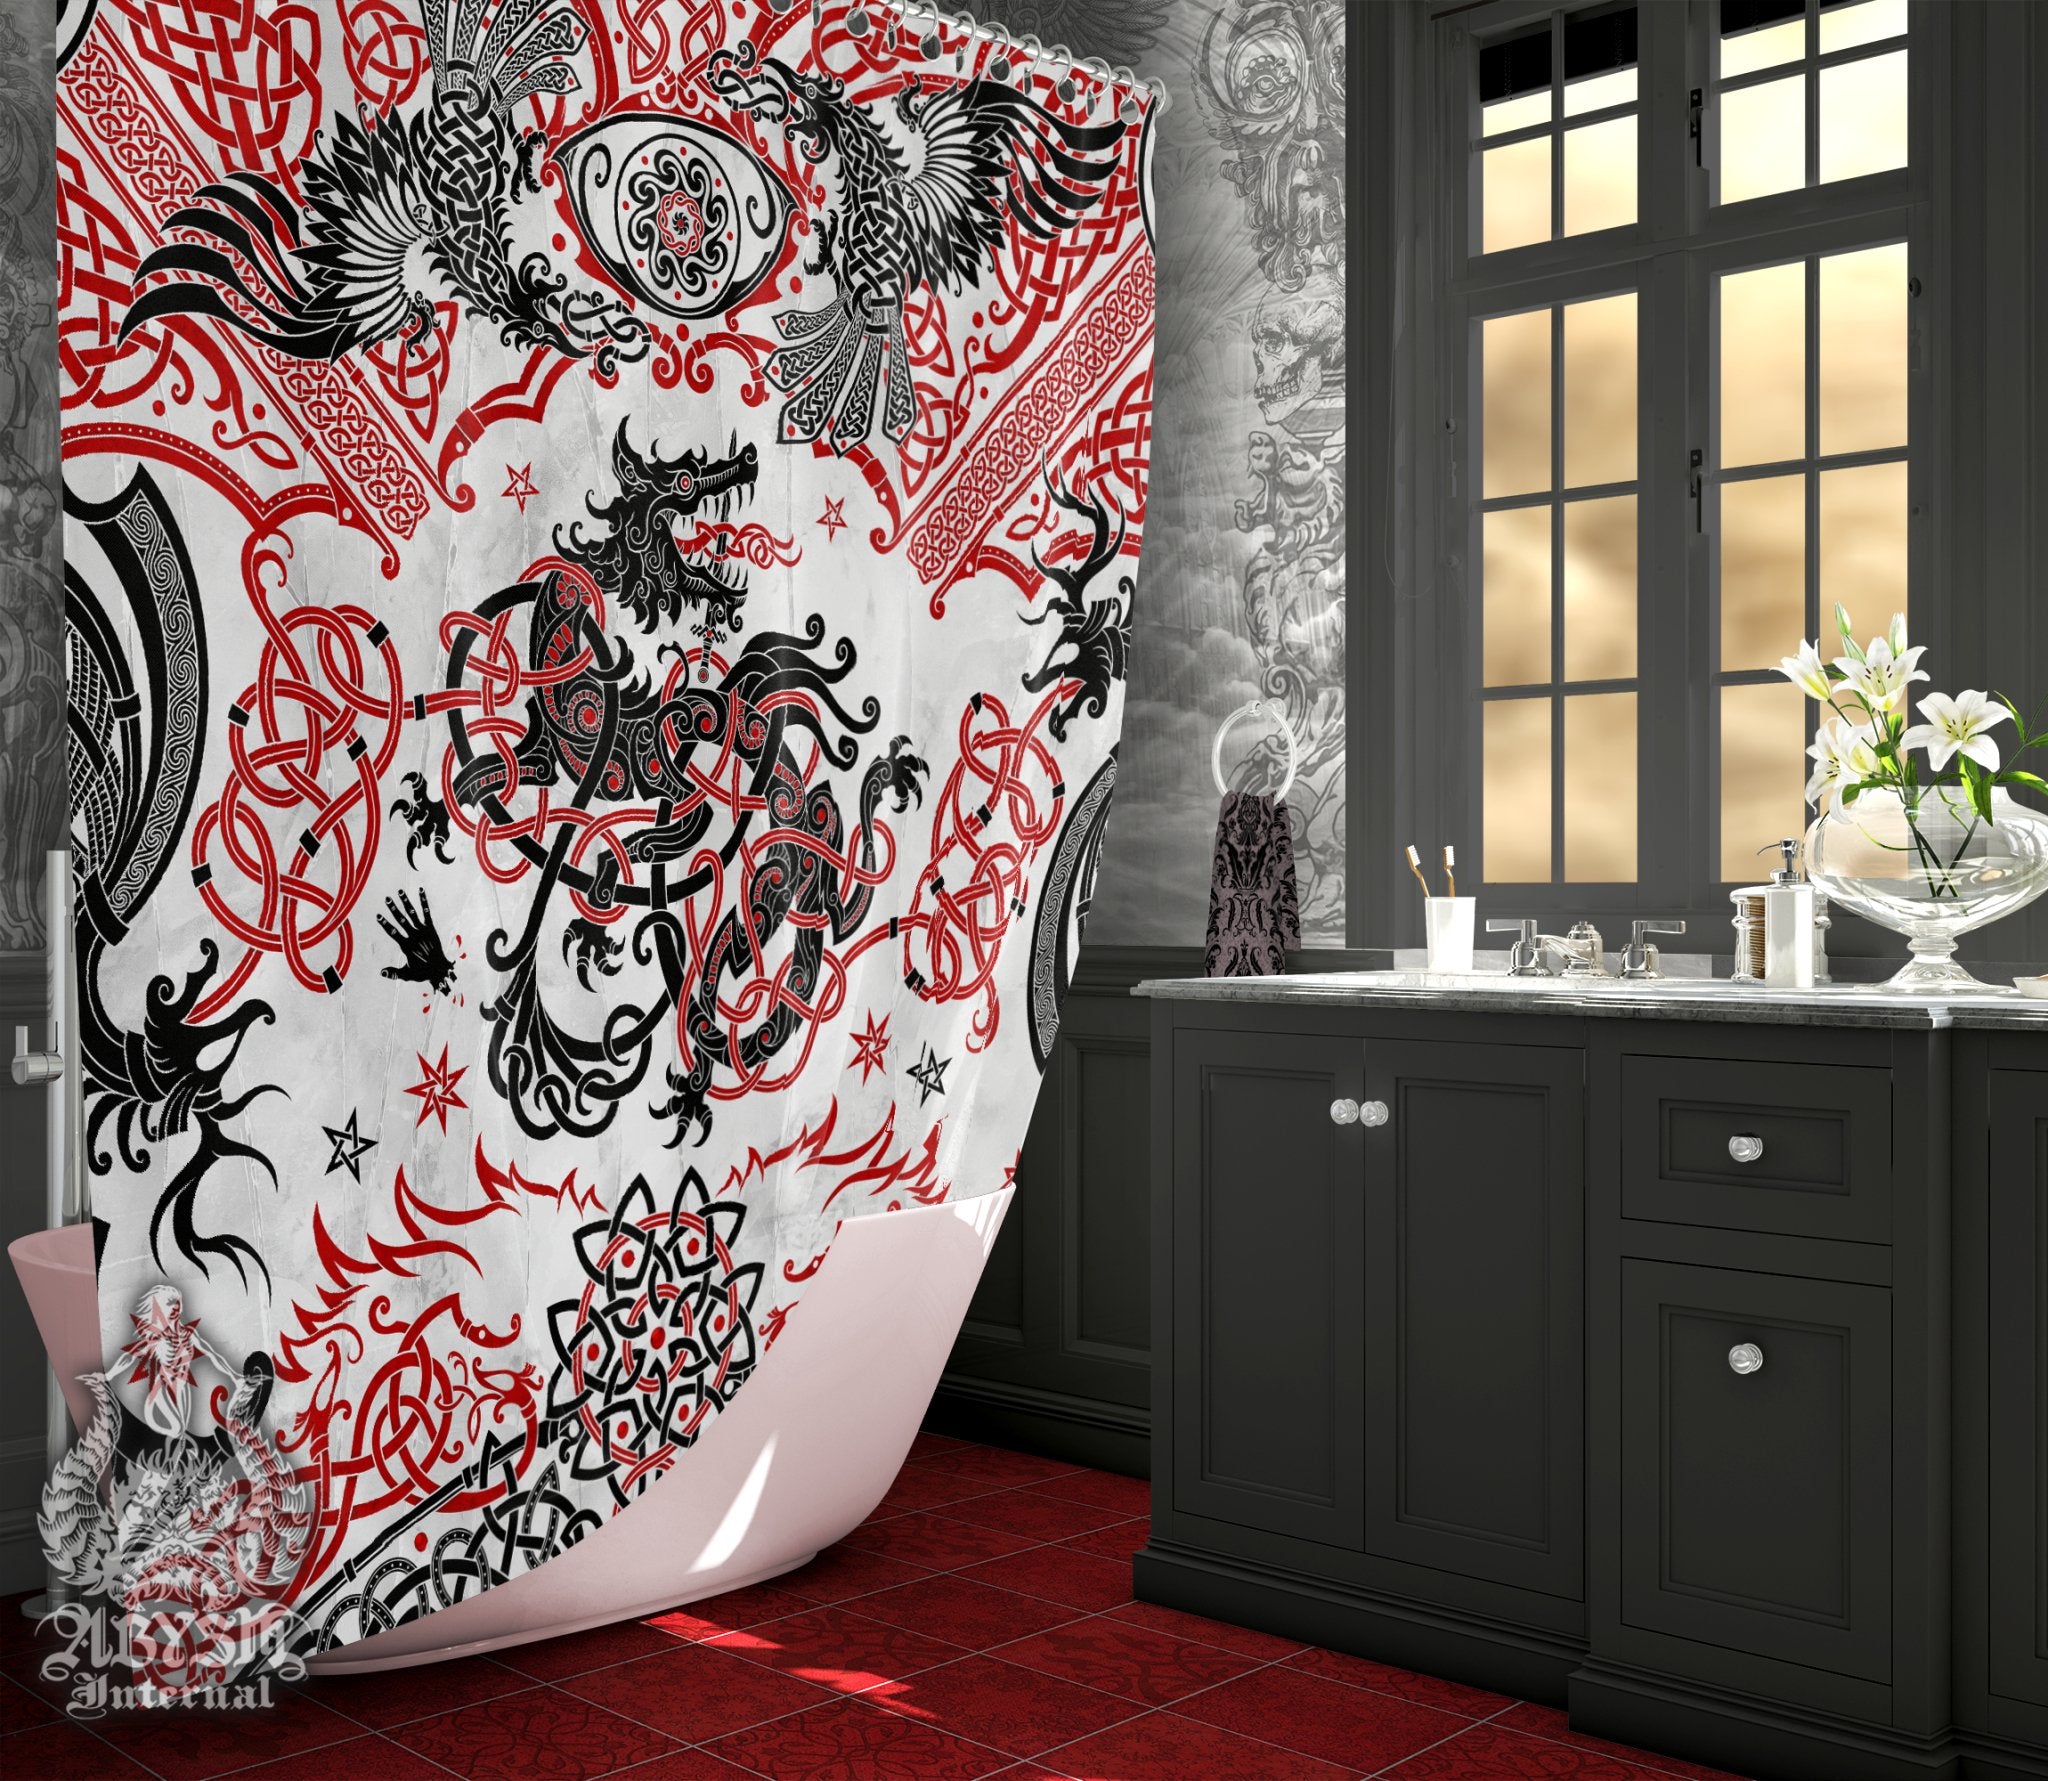 Norse Art Shower Curtain, 71x74 inches, Nordic Wolf Fenrir Bathroom Decor, Viking Art Print - White Red Black - Abysm Internal